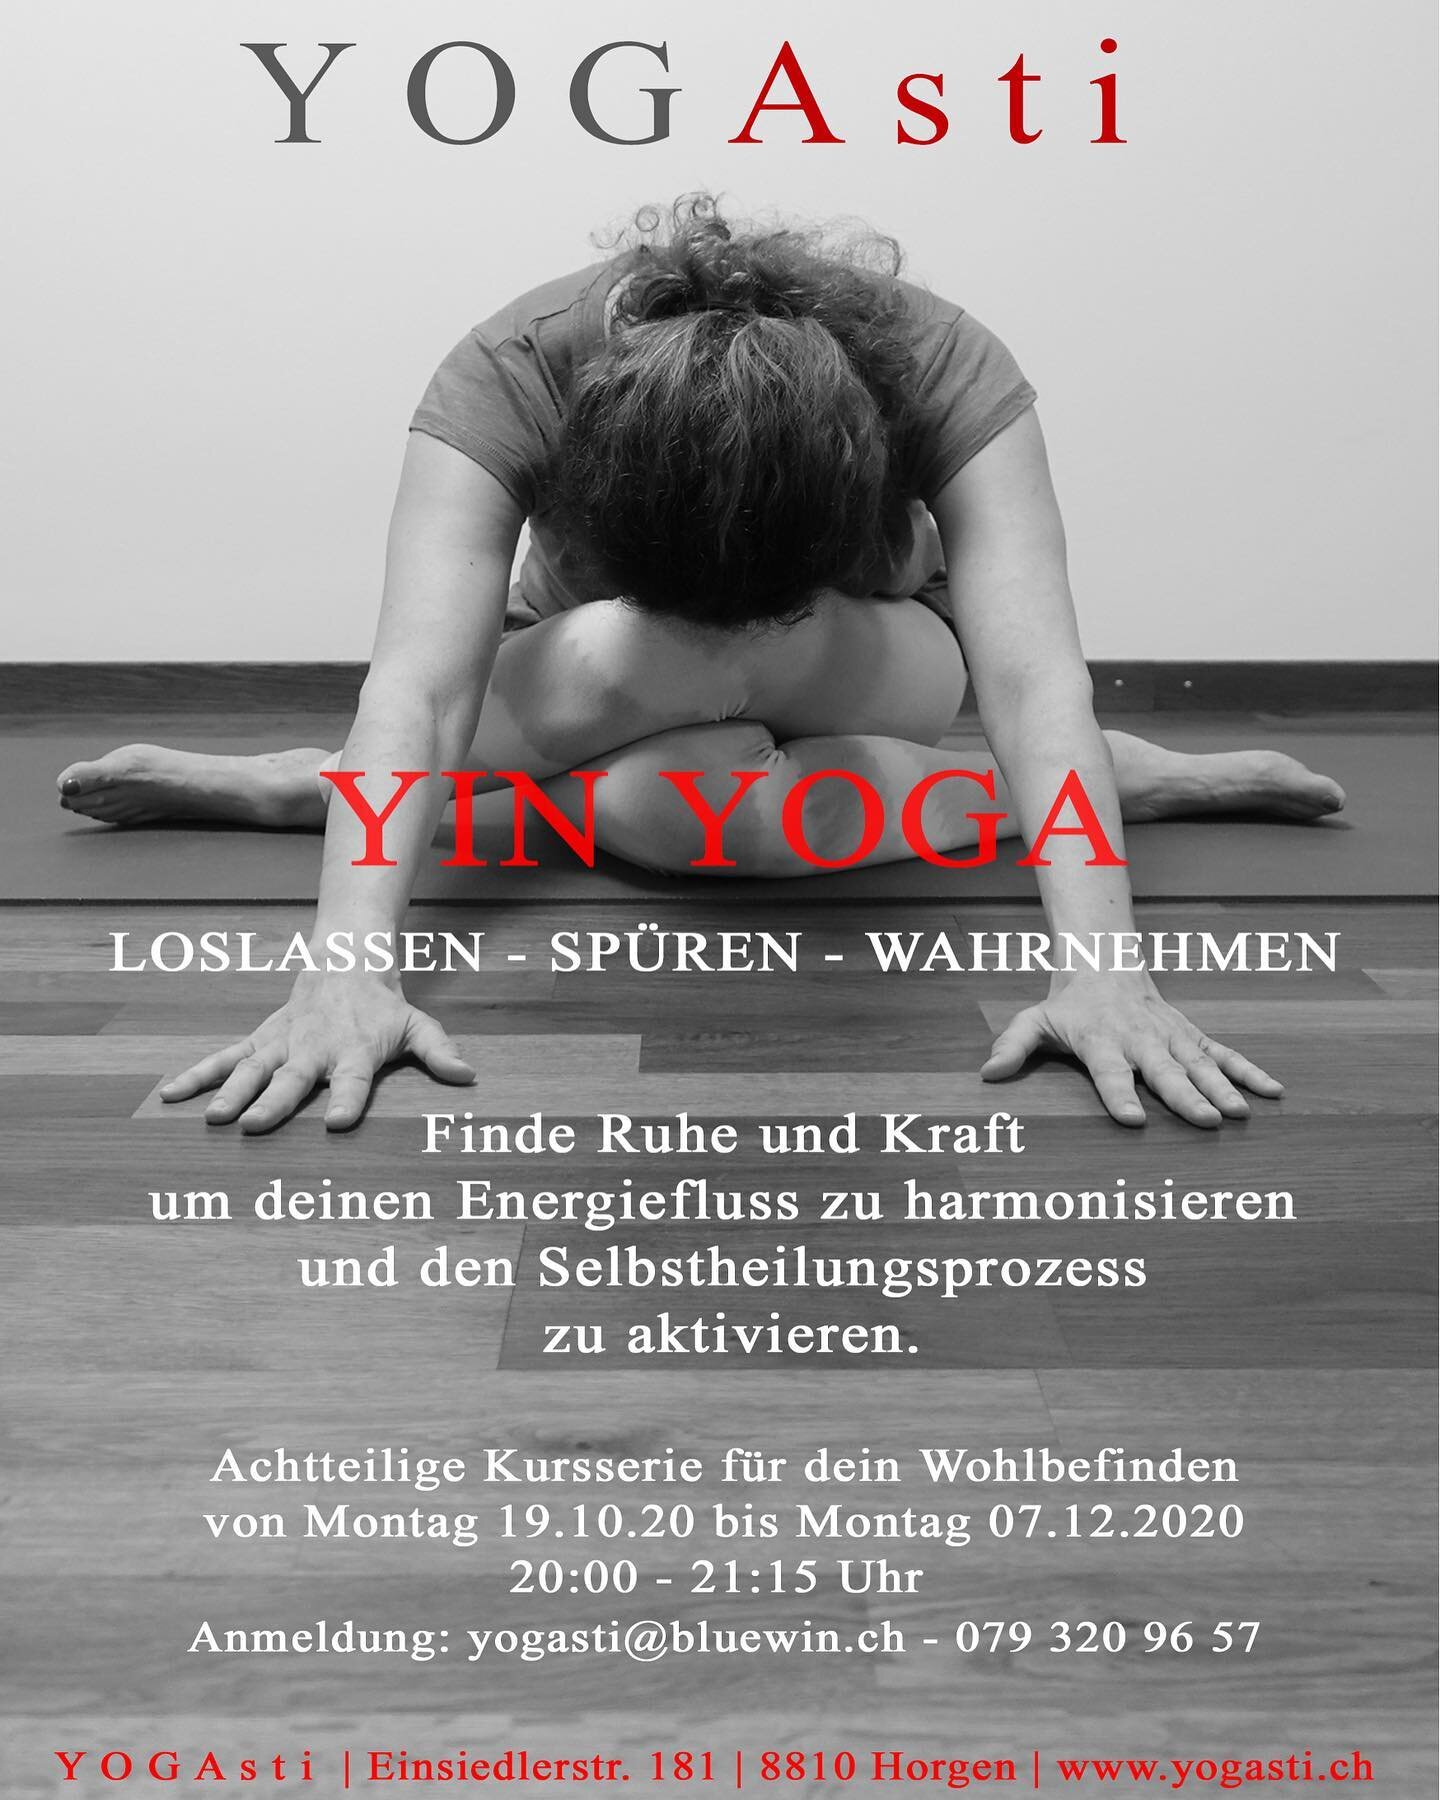 Achtsamkeit und Gesundheit durch Yin Yoga: Kursbeginn MO, 19.10.20-07.12.20/ Kurskosten Chf 160.&mdash;/www.yogasti.ch

#ruhe #achtsamkeit #meditation #balance #yinyoga #gesundheit #k&ouml;rpergeistundseeleimeinklang